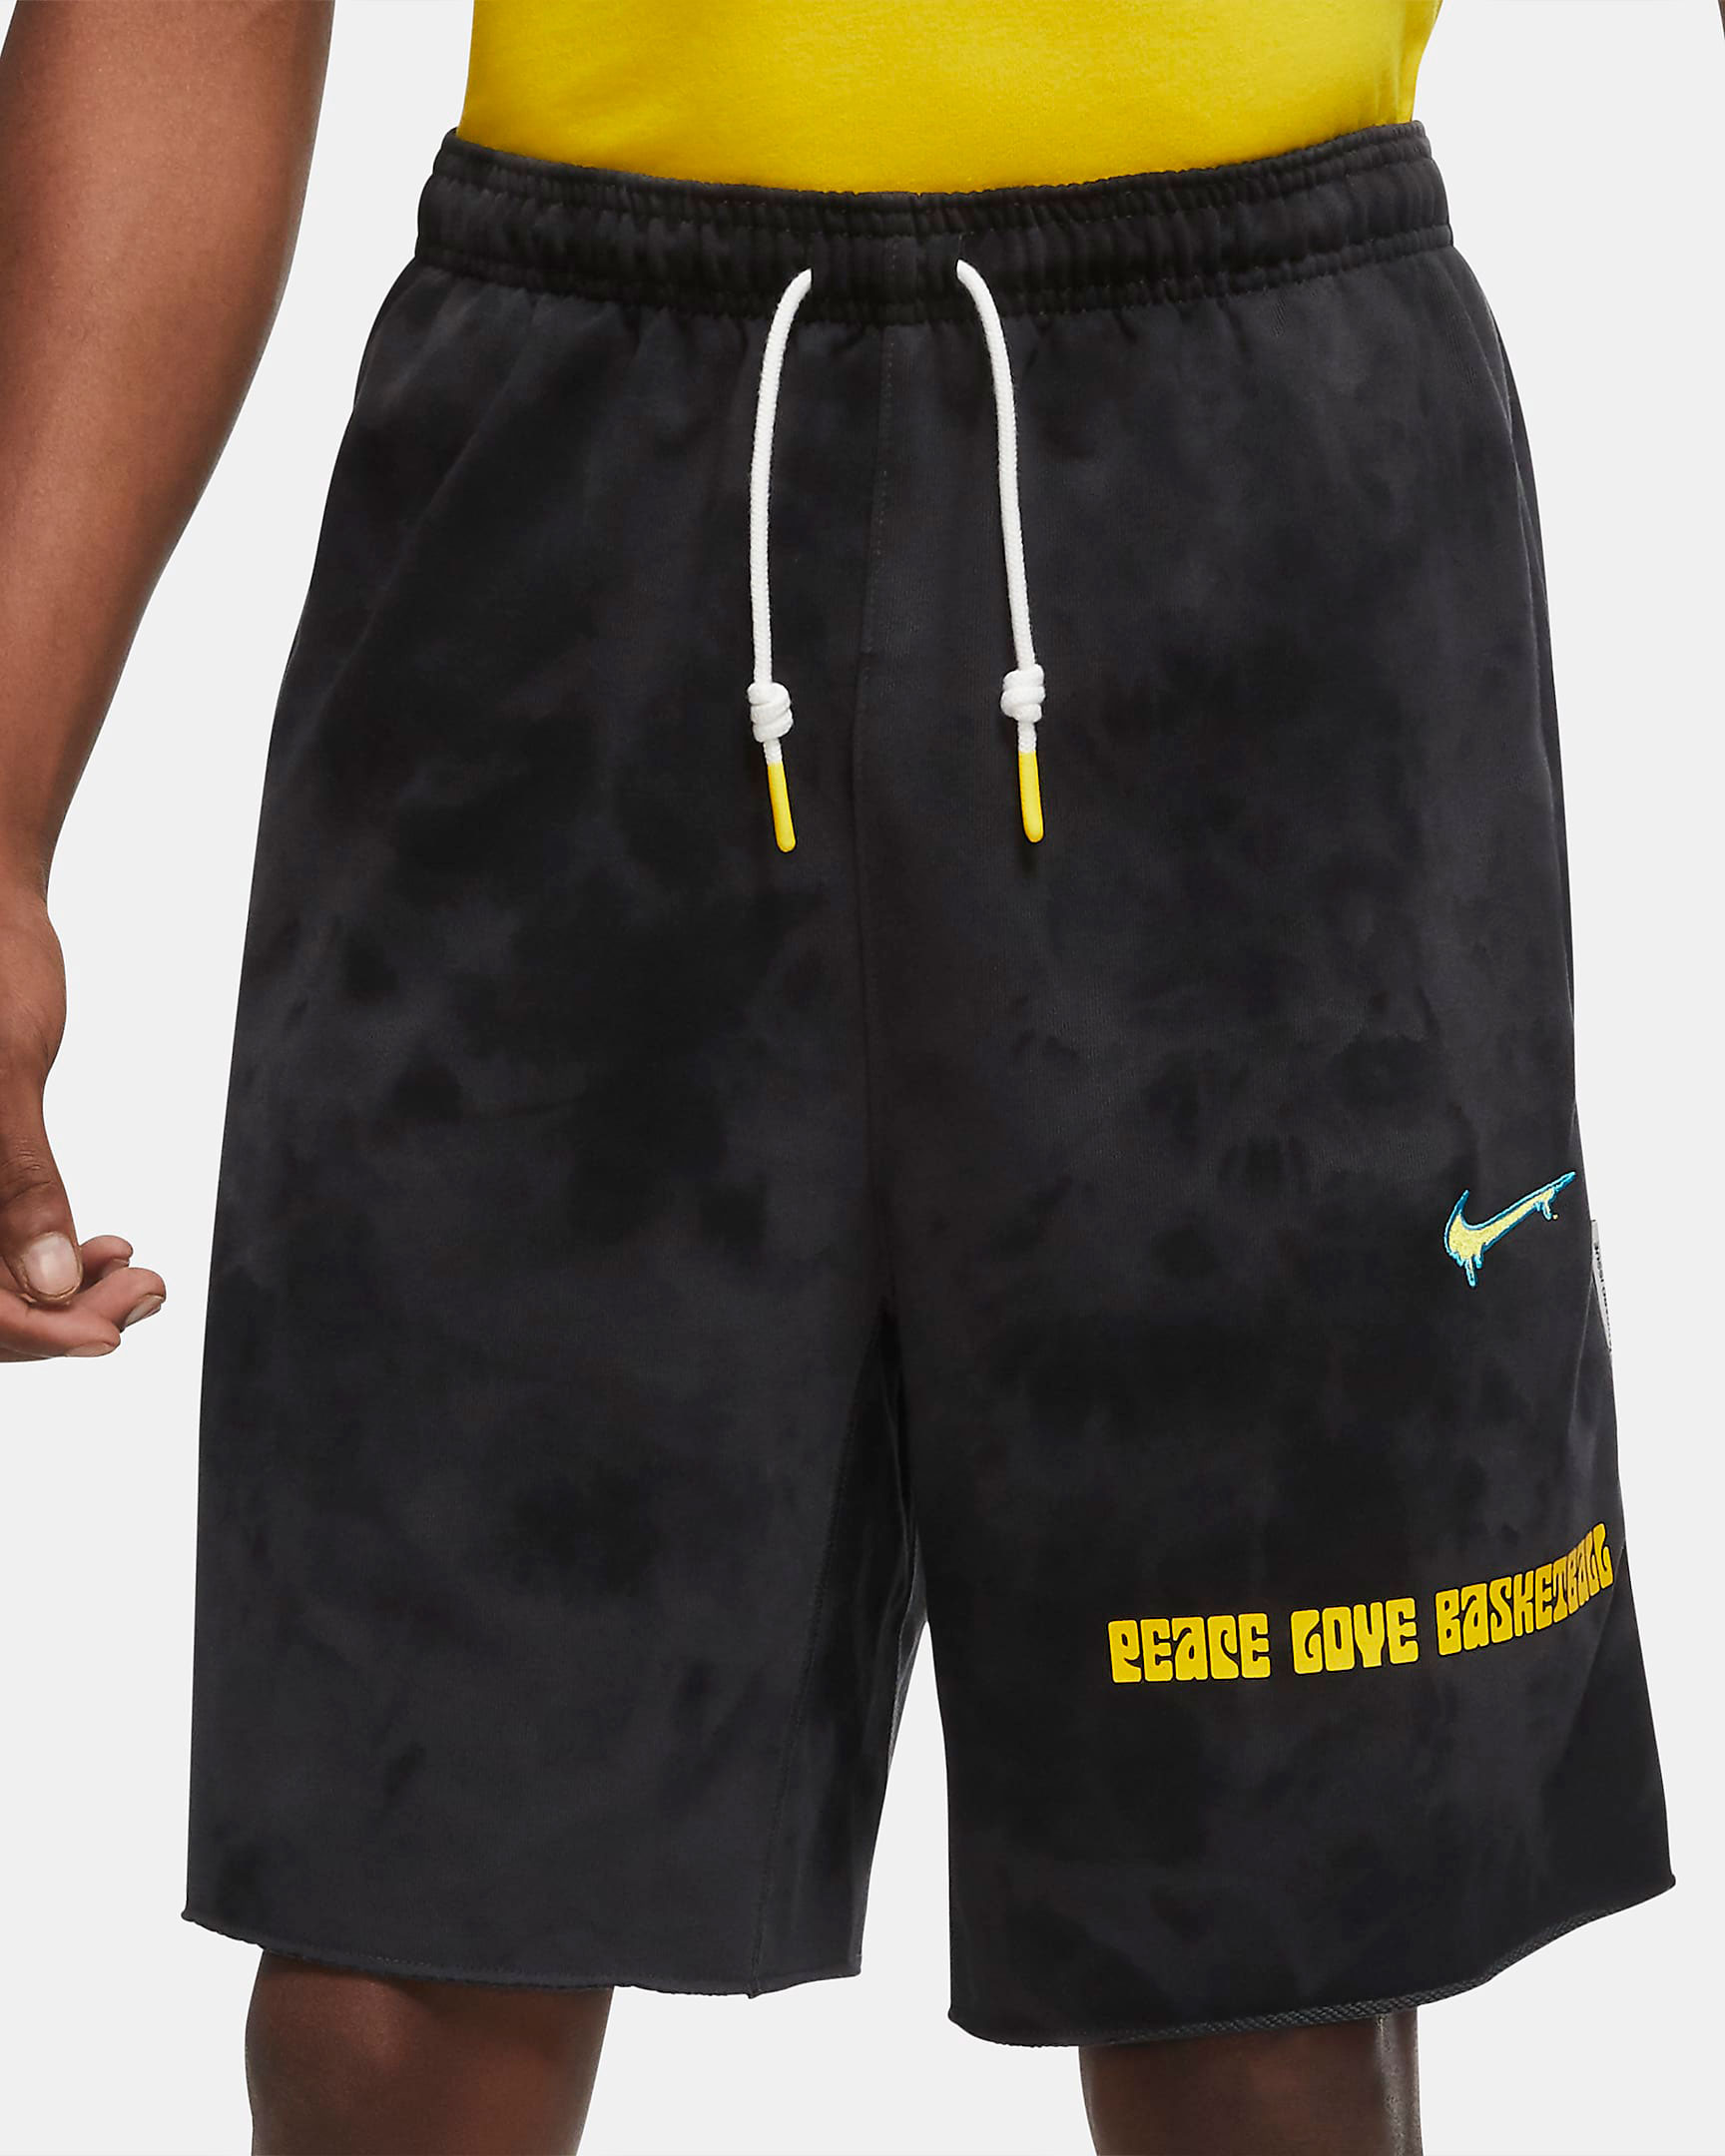 nike-peace-love-basketball-shorts-black-1